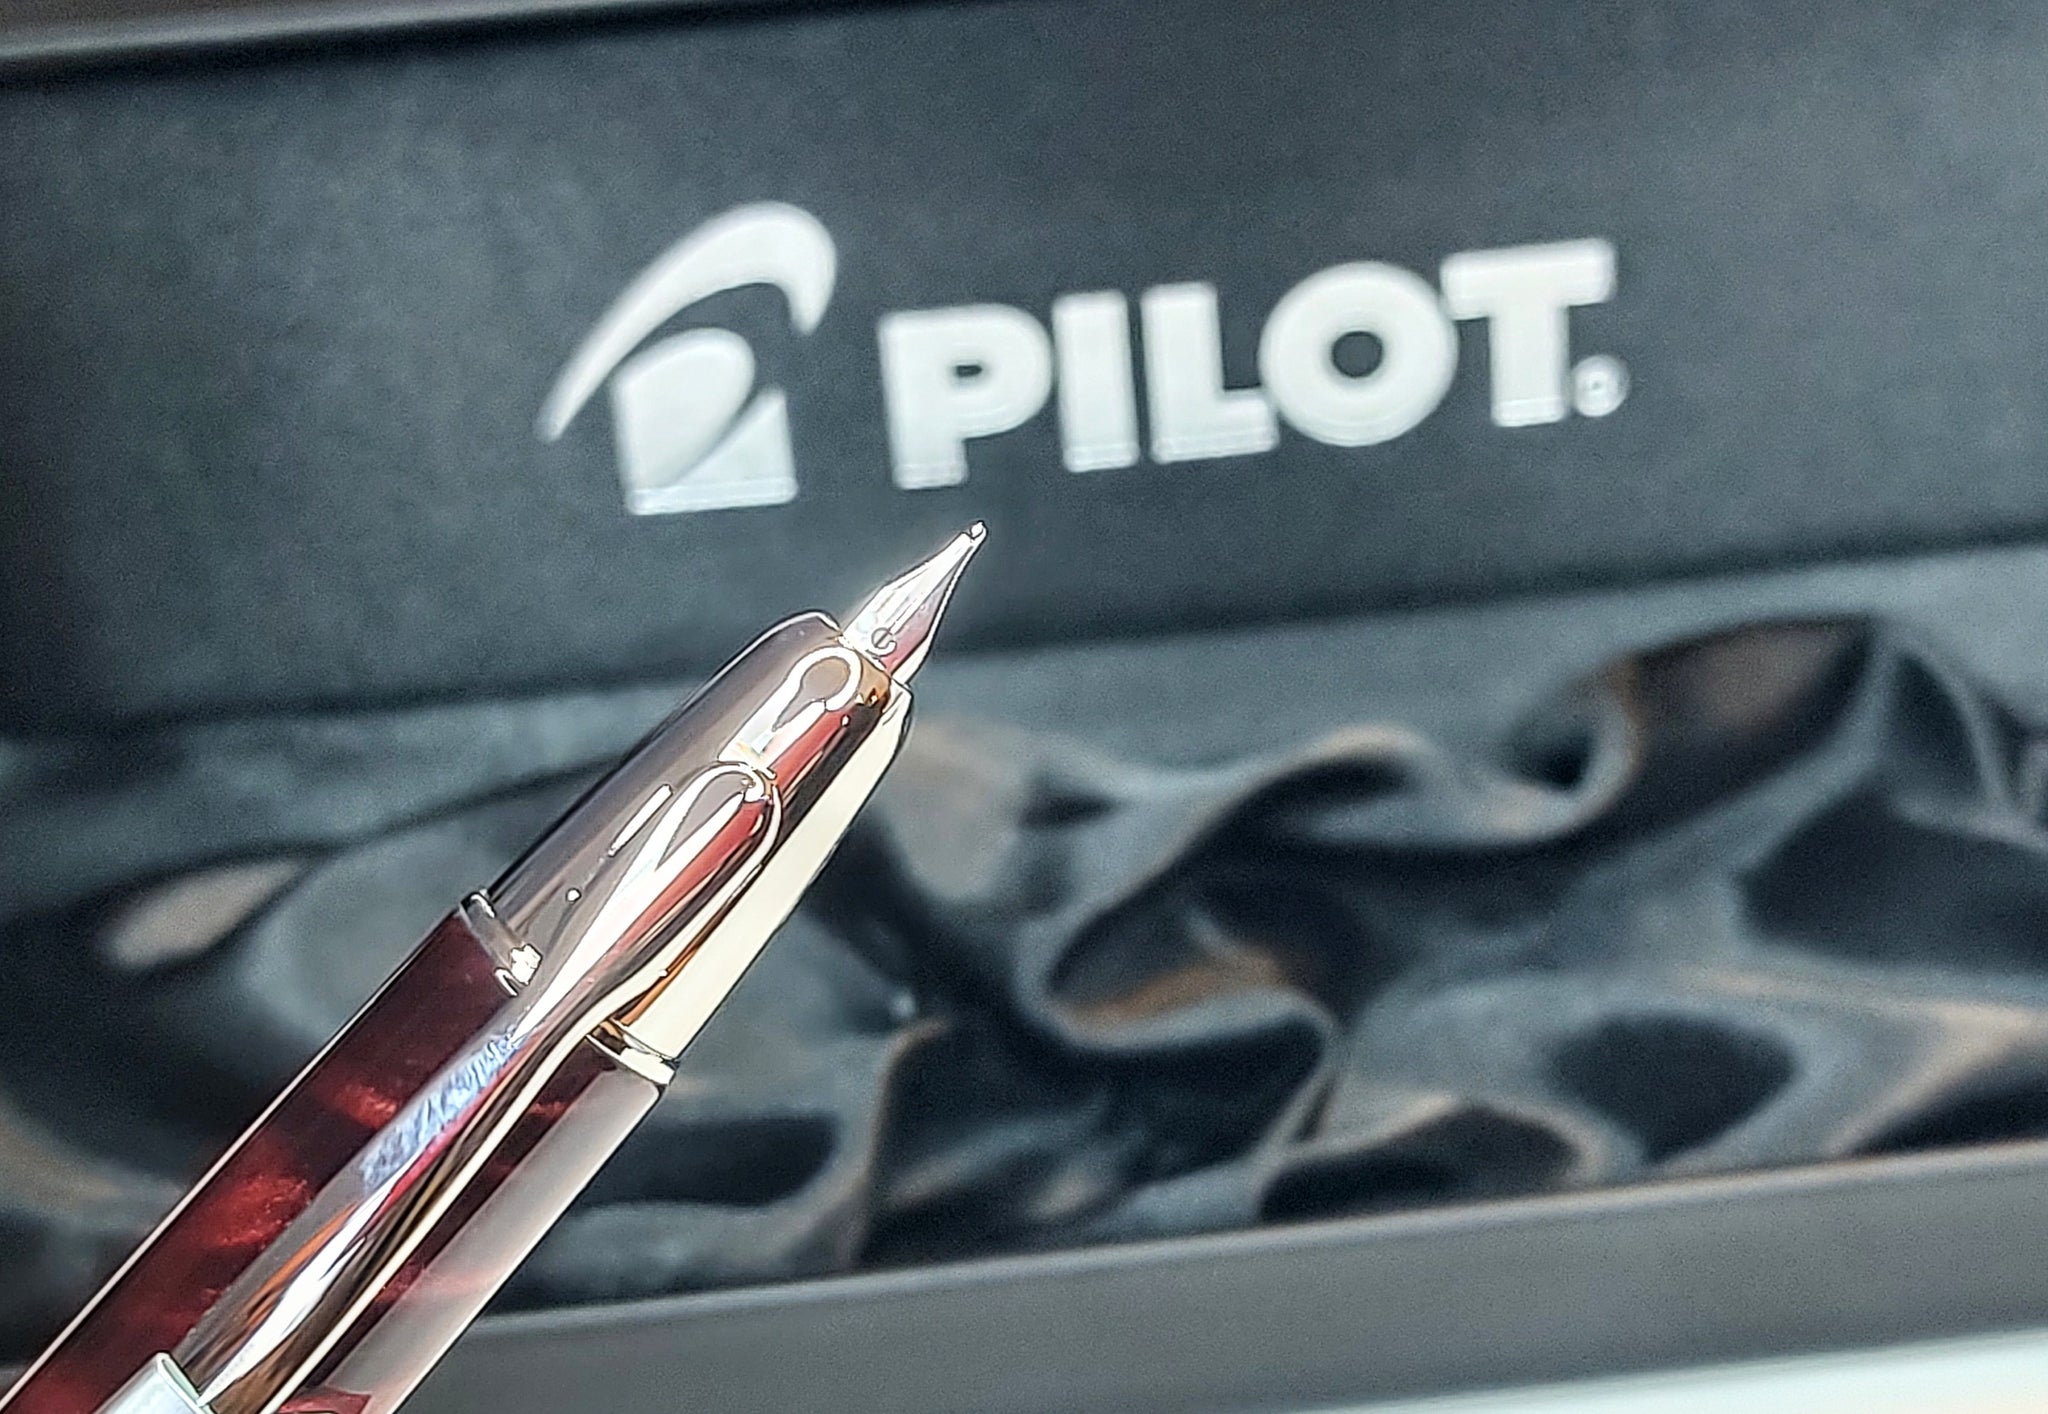 Pilot - Vanishing Point - Fountain Pen - Red/Gold